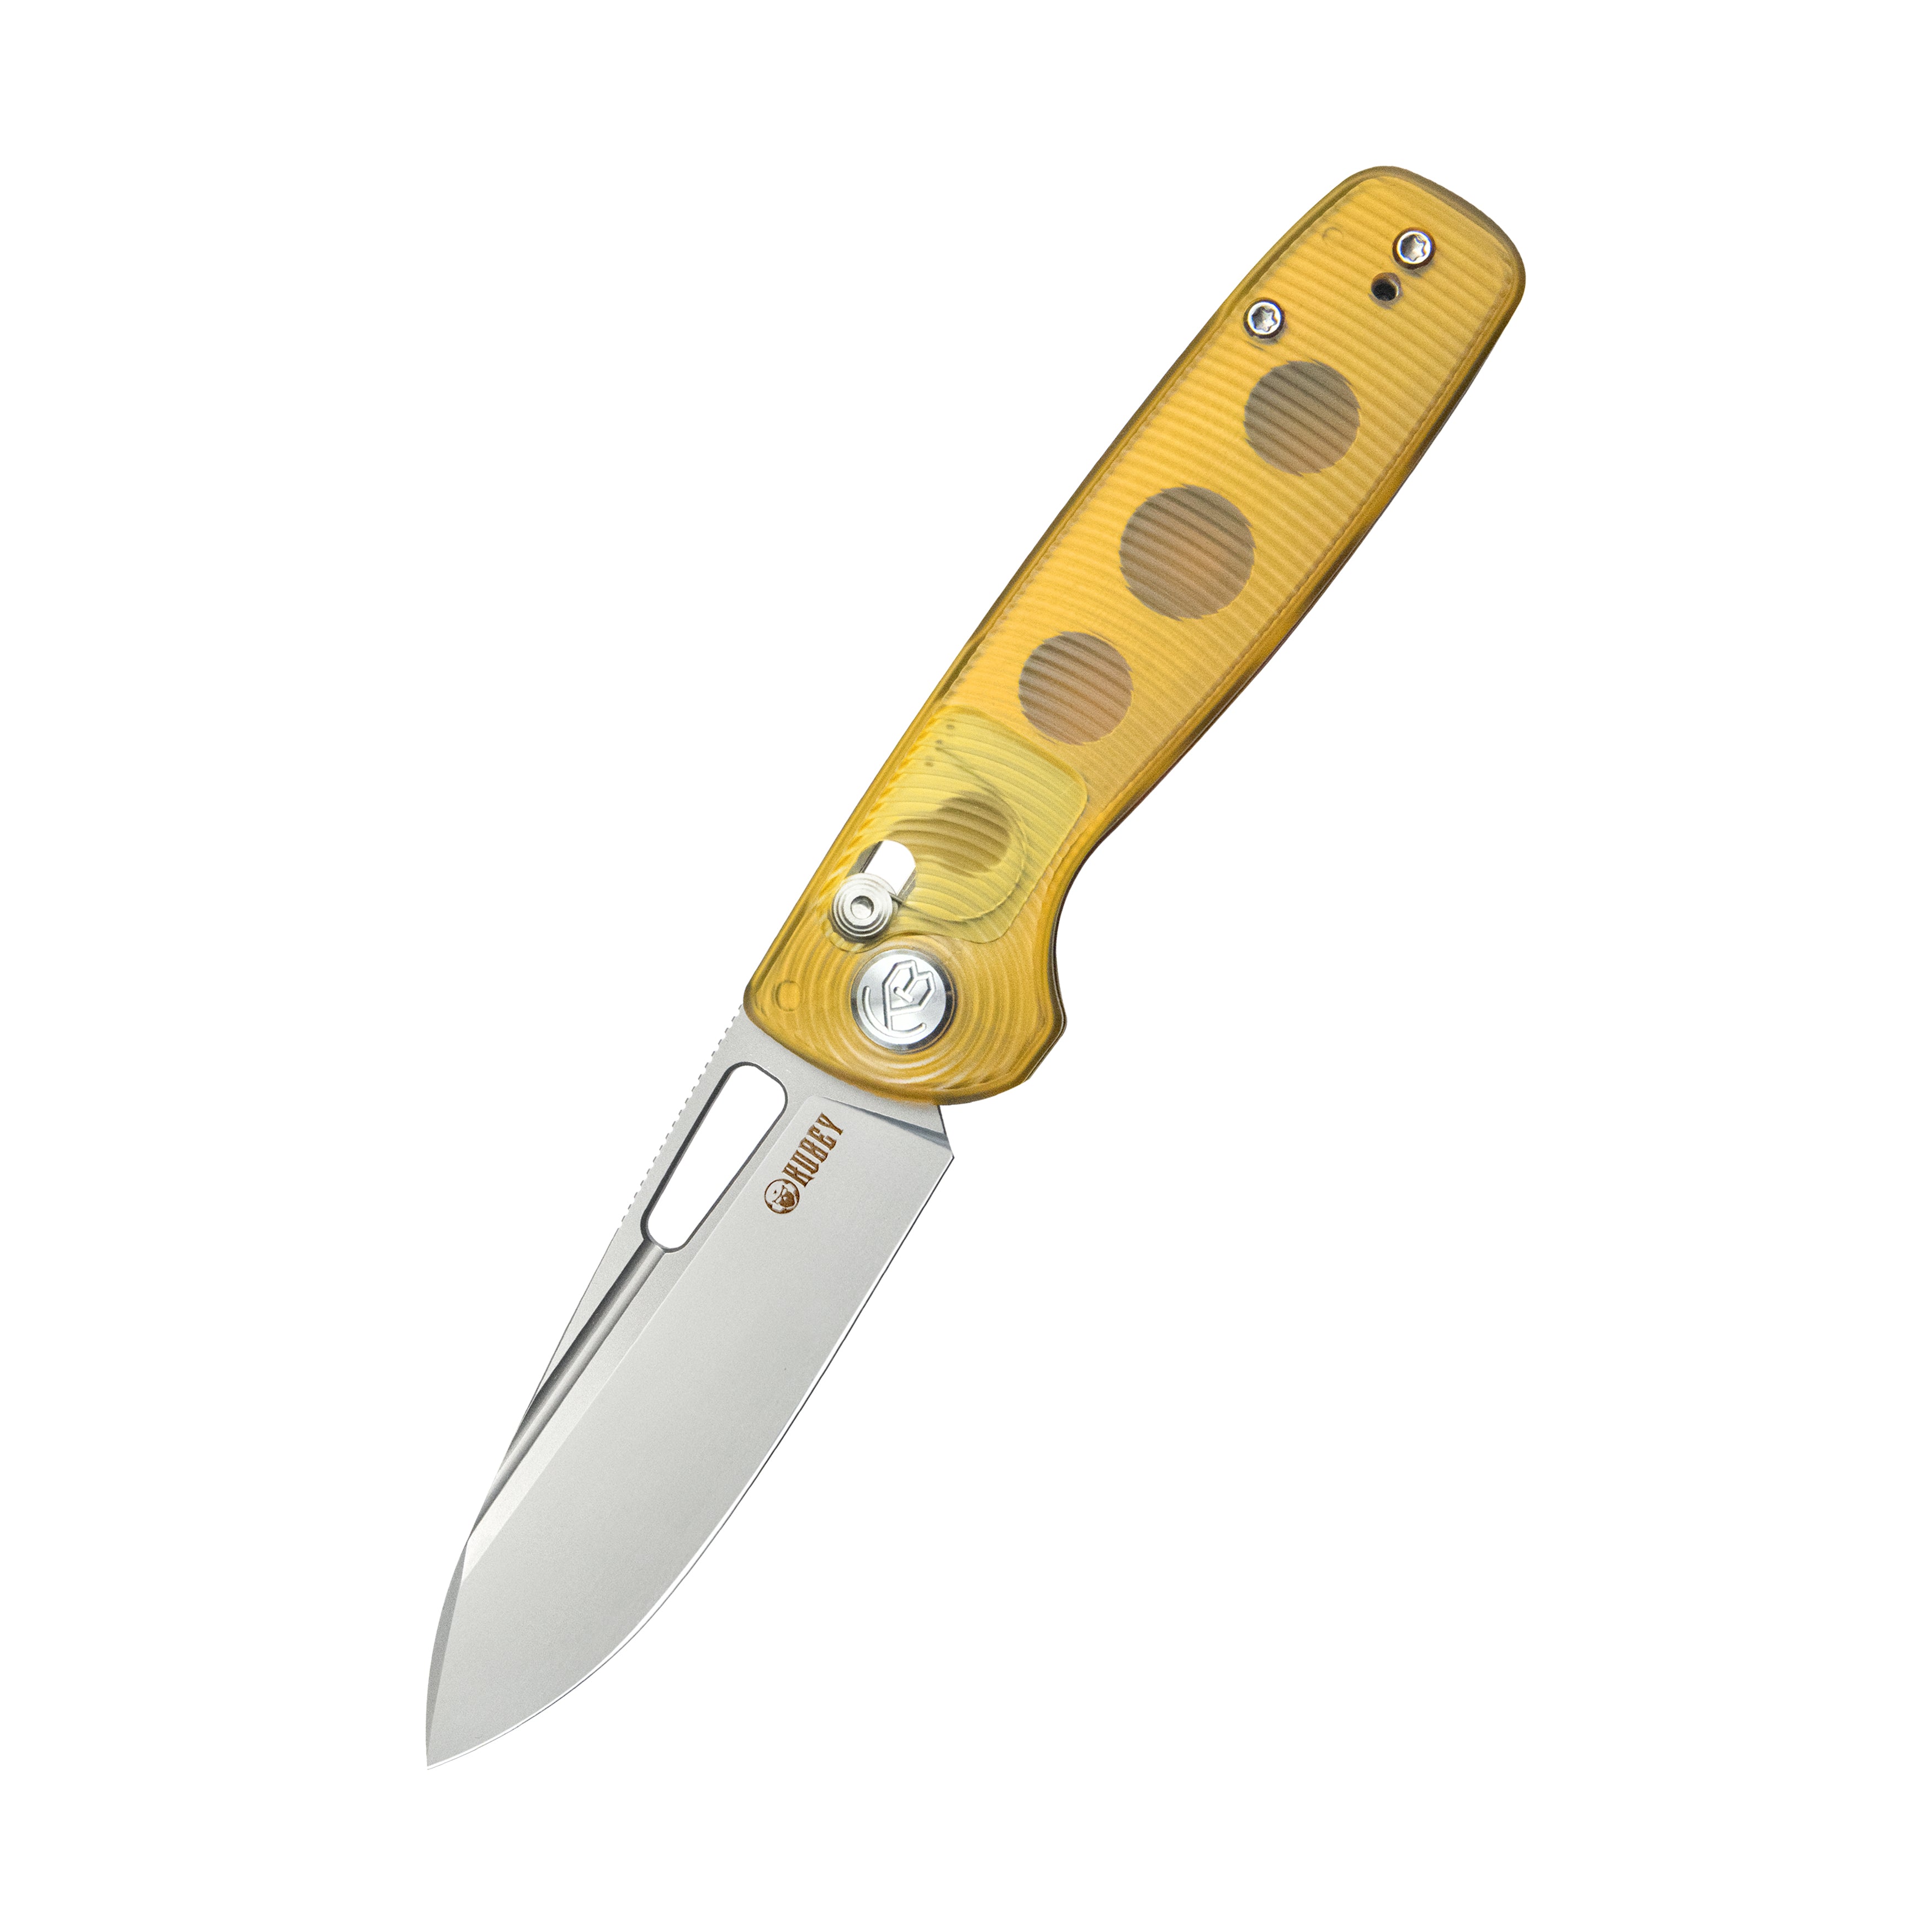 Kubey Bluff Crossbar lock Everyday Carry Pocket Folding Knife Ultem Handle Sandblast 14C28N Blade KU248A